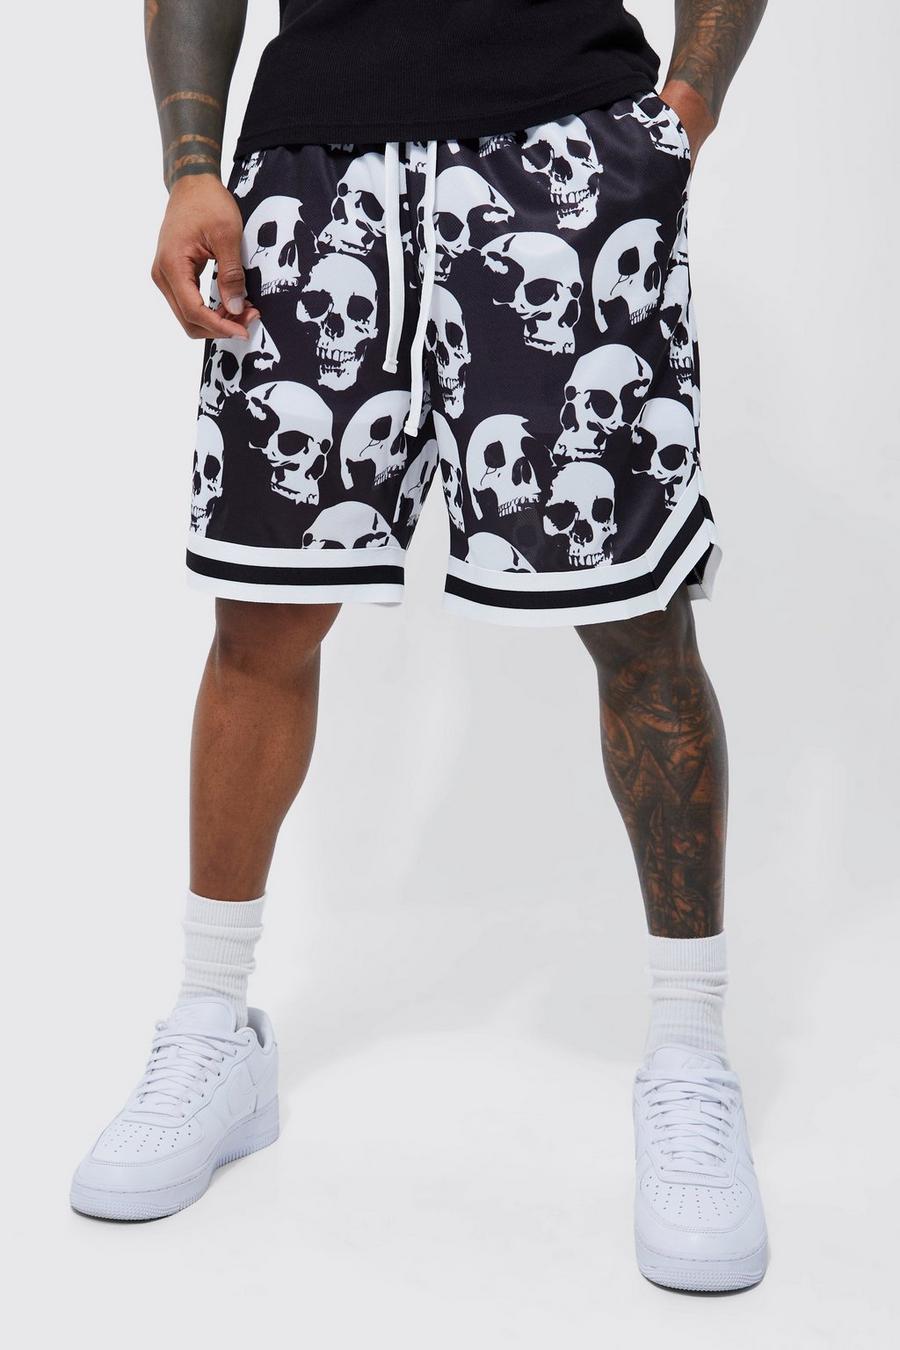 Black Loose Fit Skull Print Mesh Basketball Short